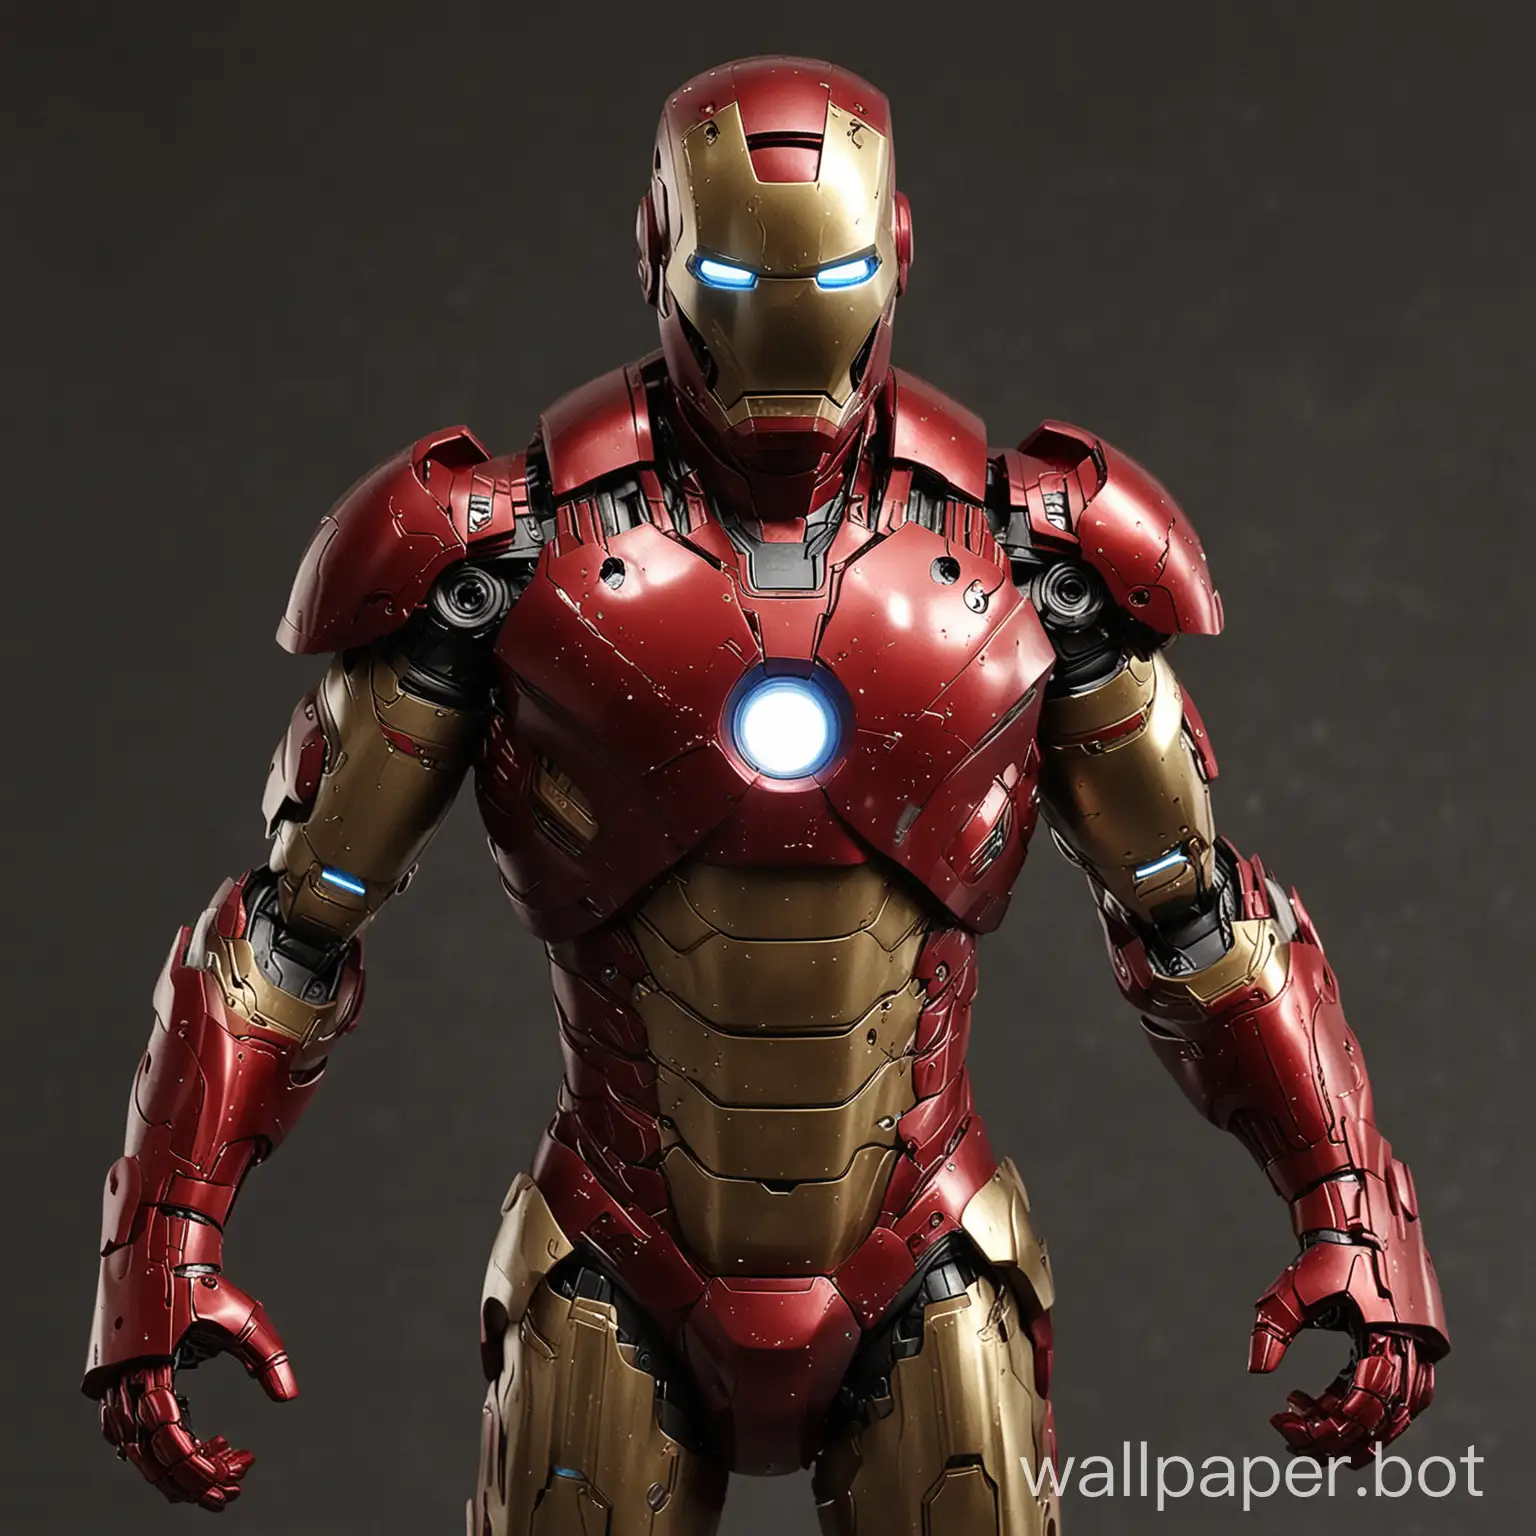 Futuristic-Iron-Man-Suit-Prototype-Testing-in-Stark-Industries-Facility